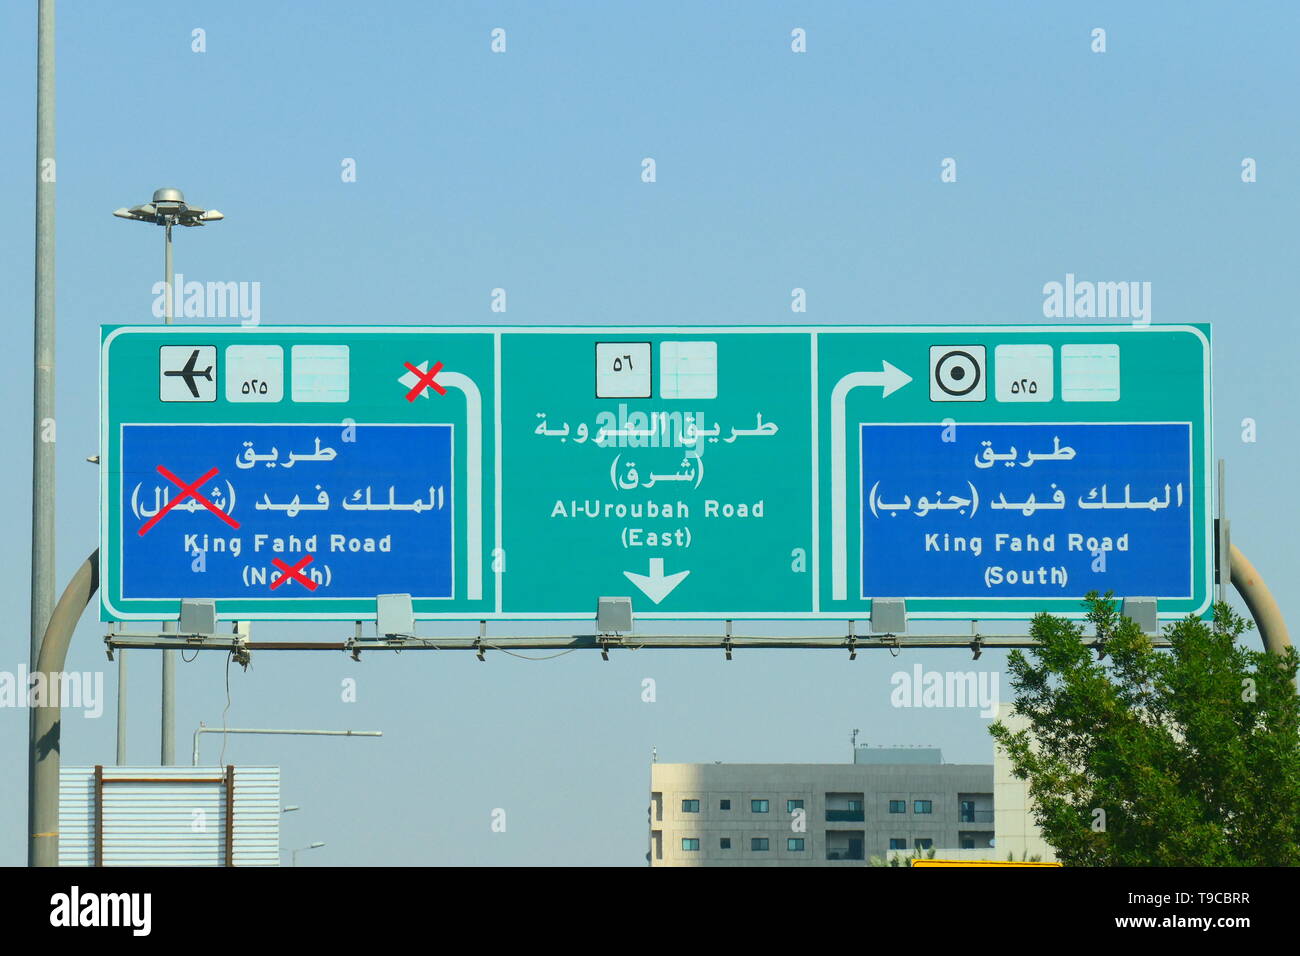 Highway road sign in Riyadh, Saudi Arabia Stock Photo